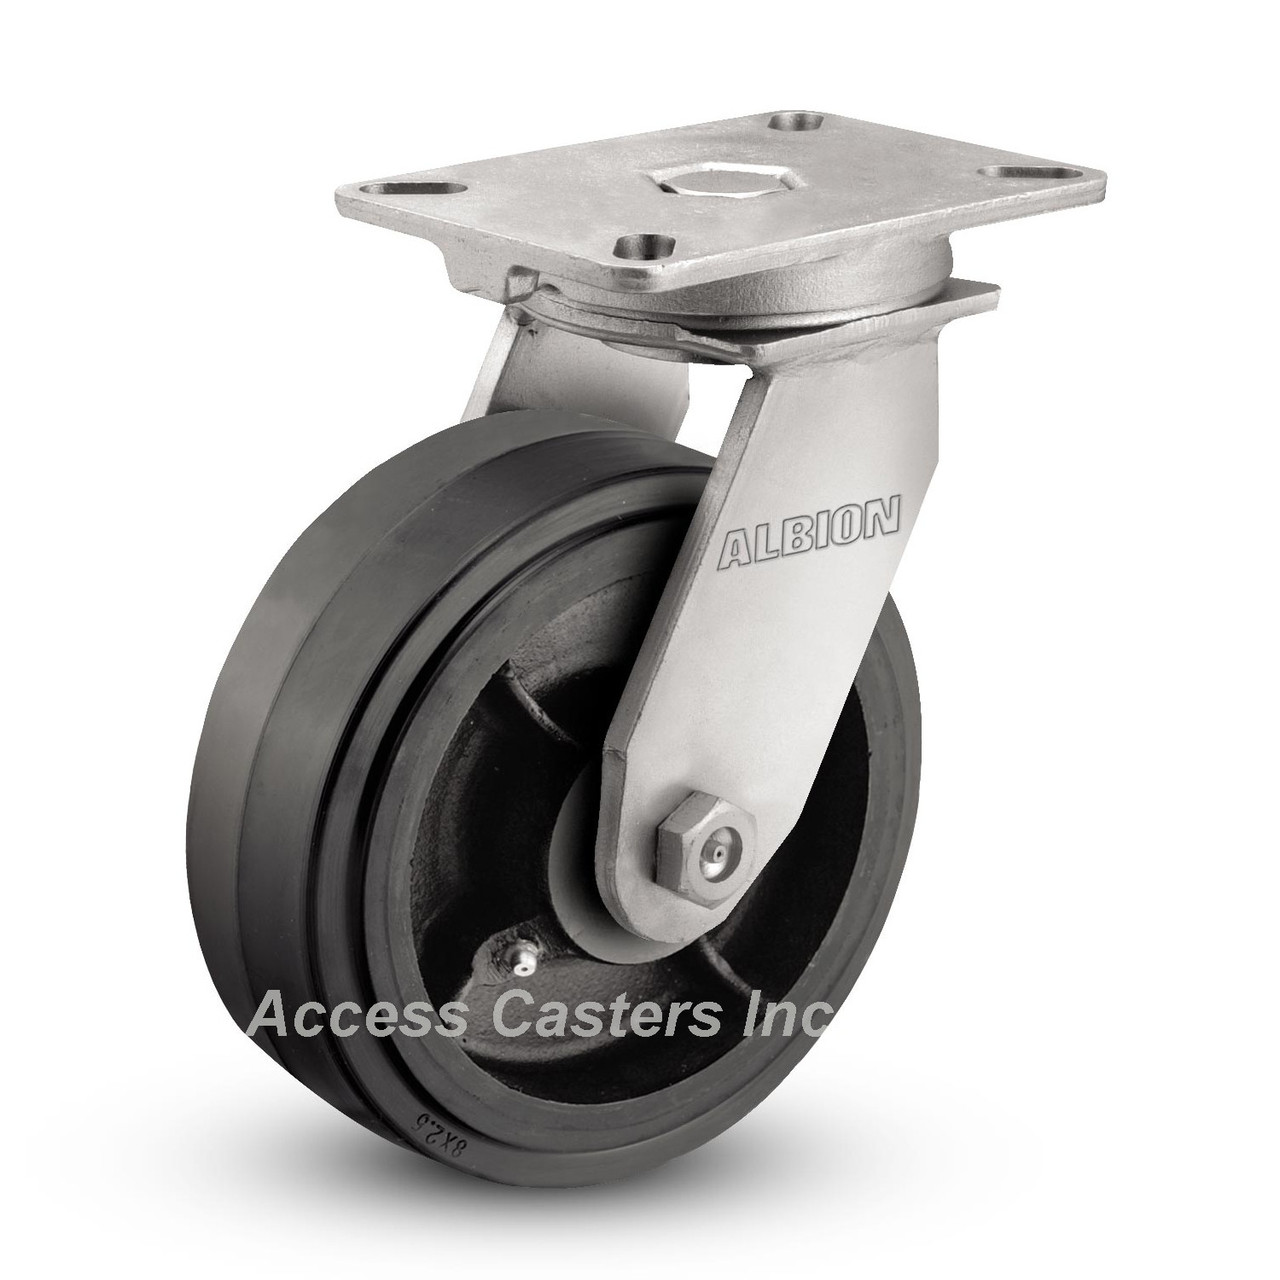 10A90MRS Heavy duty 10" swivel caster with rubber on cast iron wheel